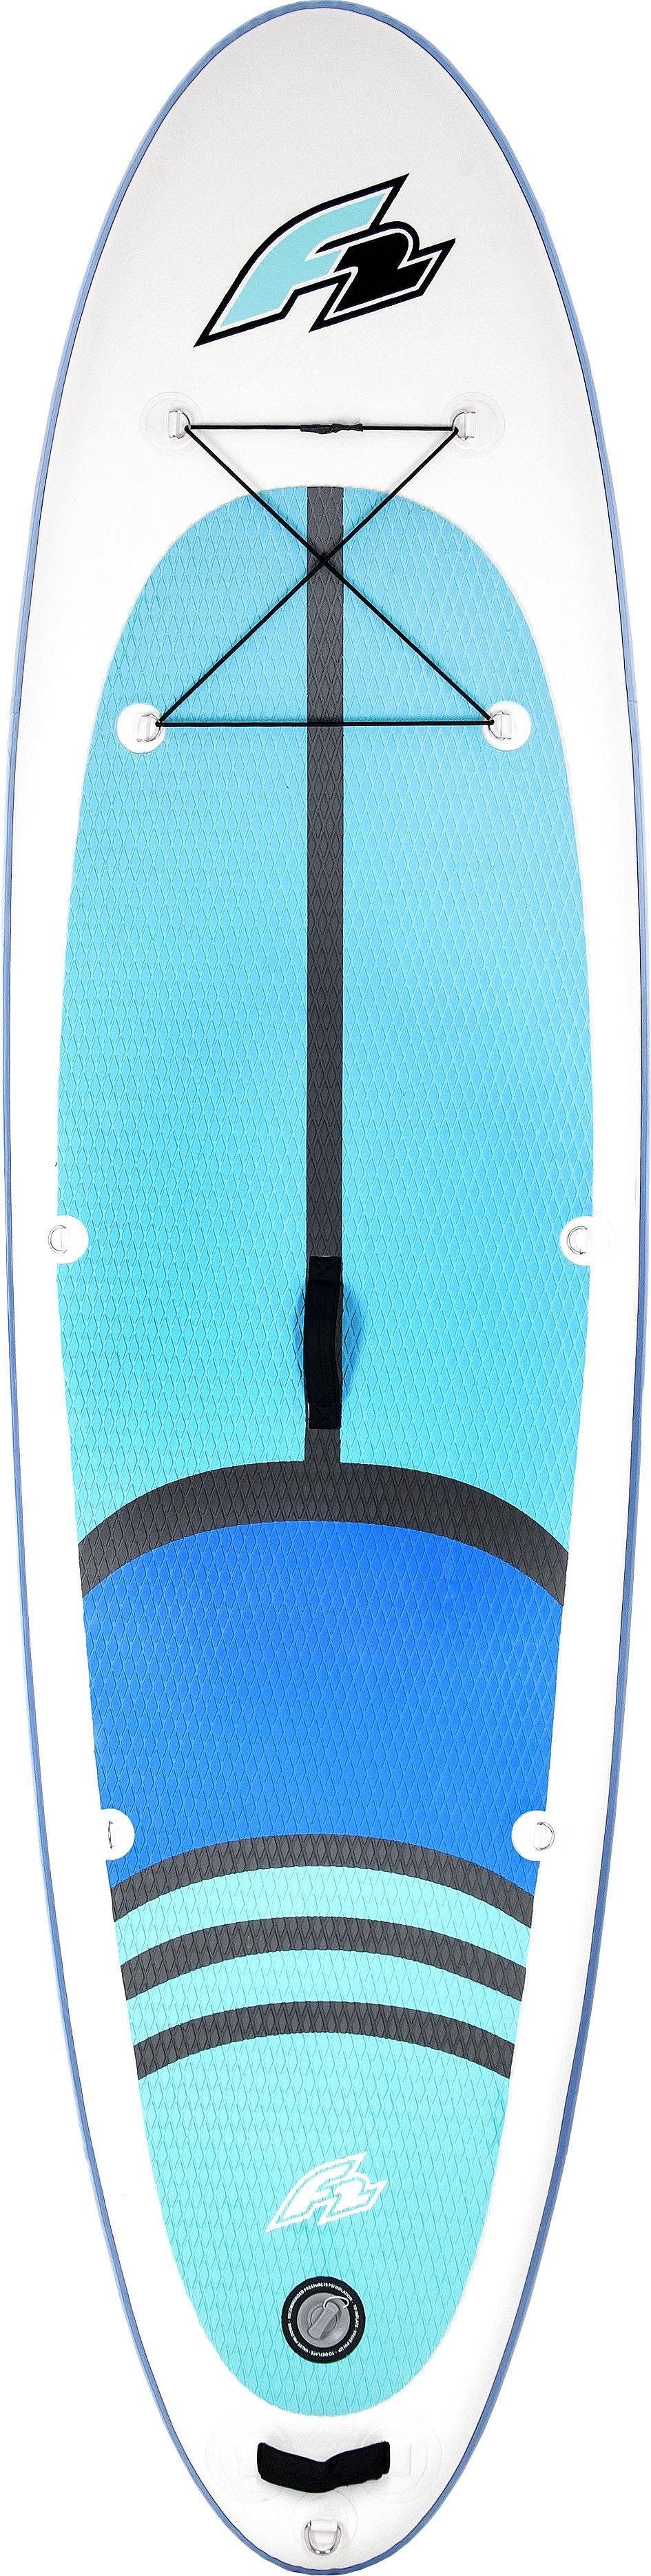 F2 Inflatable SUP-Board Cross 4 F2 10,5, tlg), Paddel (Set, ohne